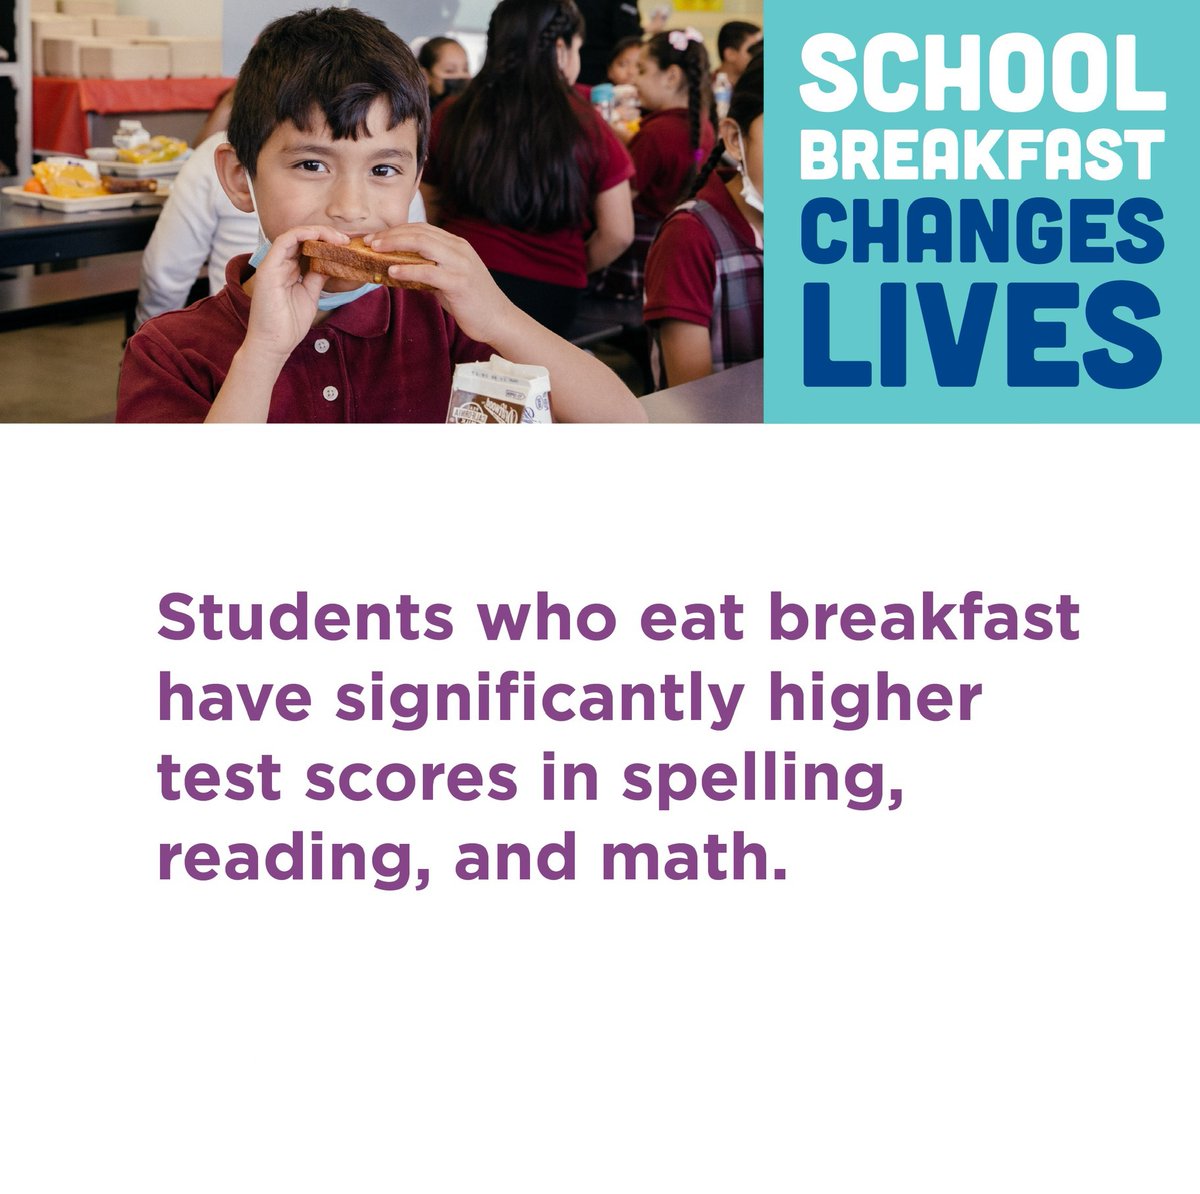 Happy National School Breakfast Week! @NYCSchools breakfast sets students up for success. #NSBW24